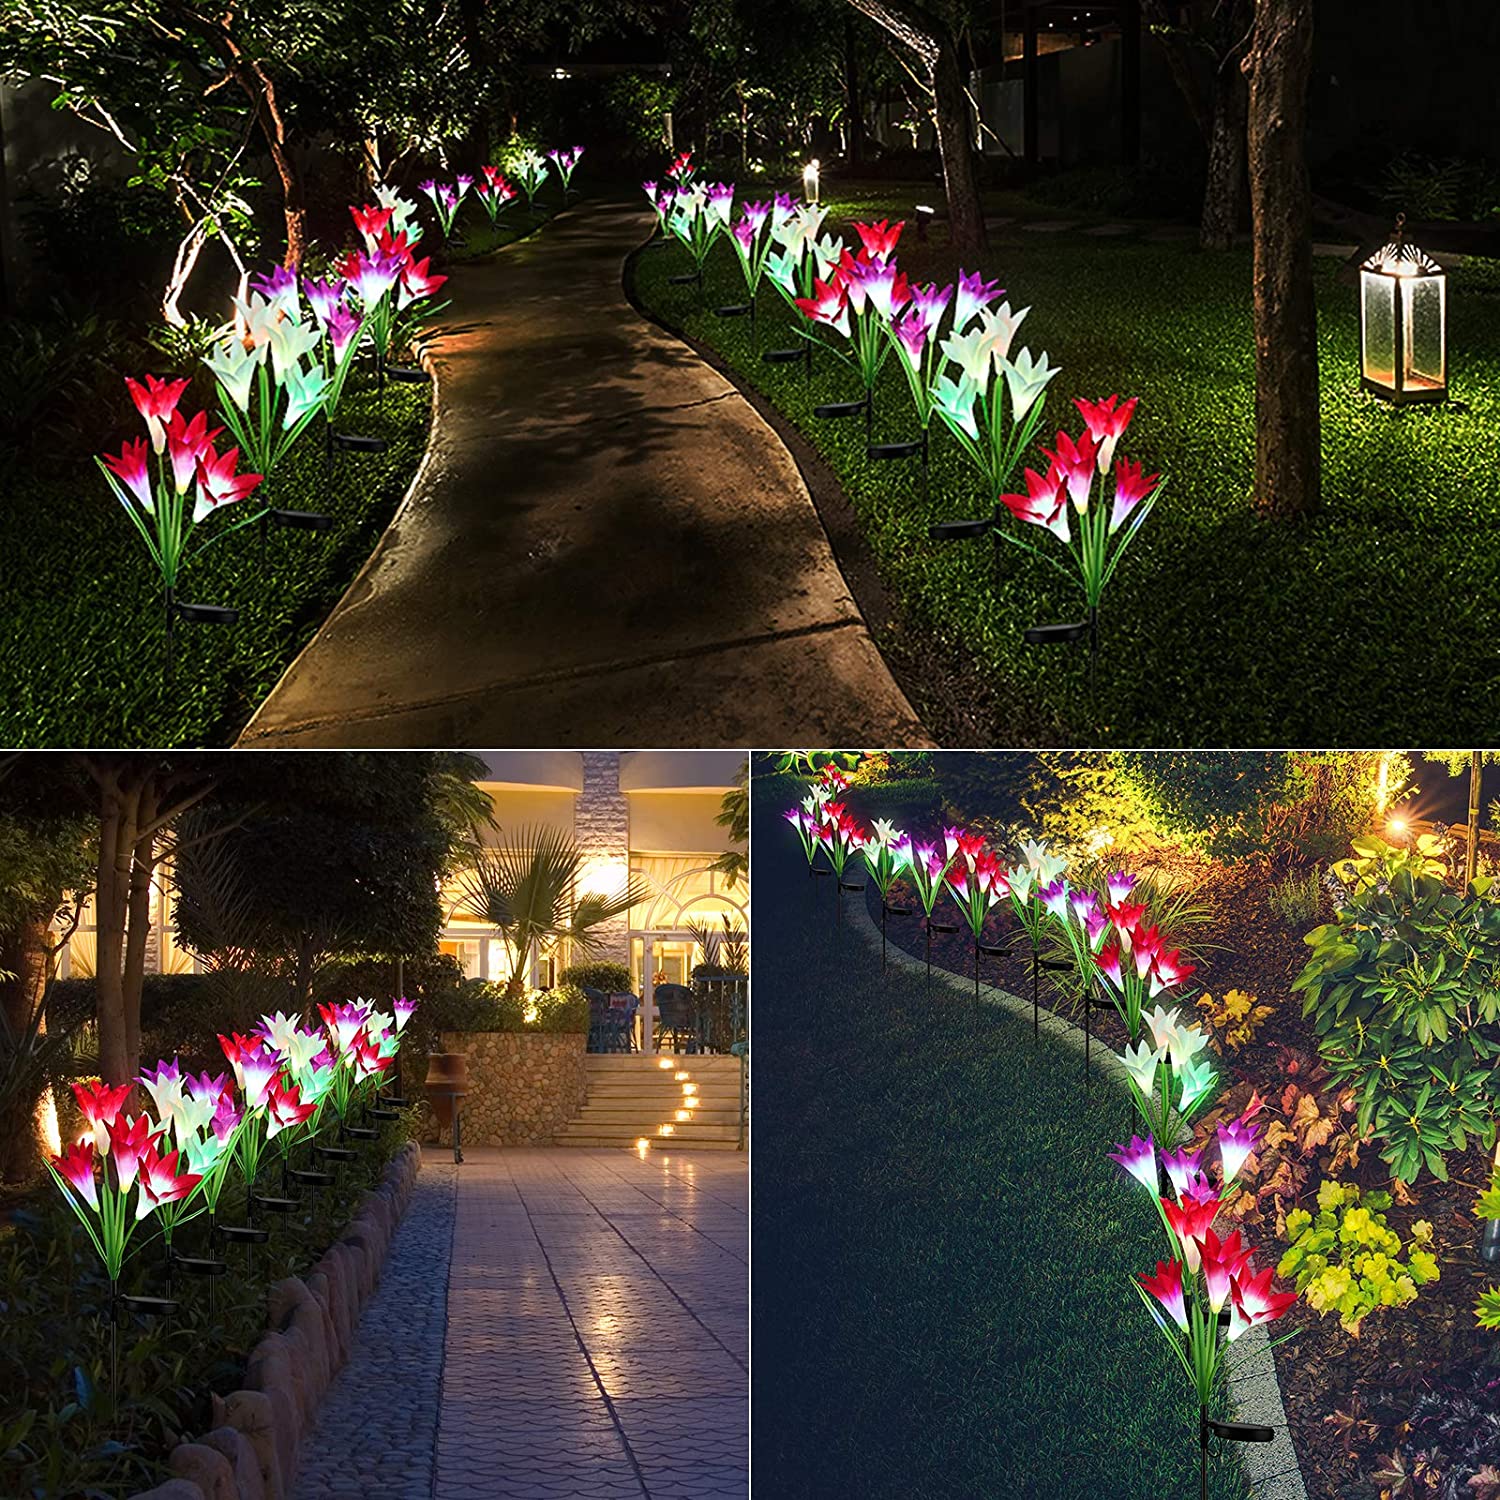 6616B Waterproof Outdoor Solar Lily Flower Stake Lights ( Pack Of 2 pcs ) DeoDap